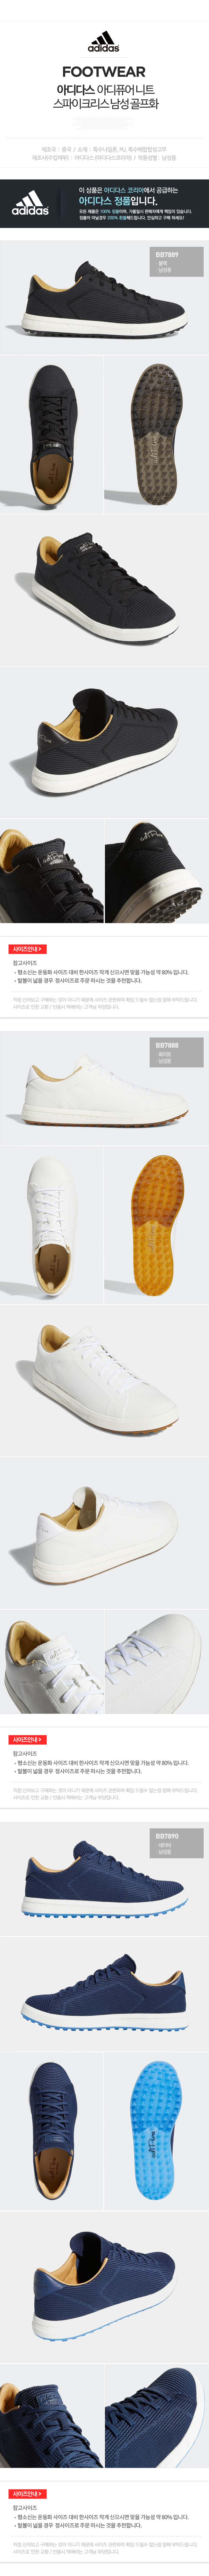 adidas_adipure_knit_spikeless_shoes_21.jpg